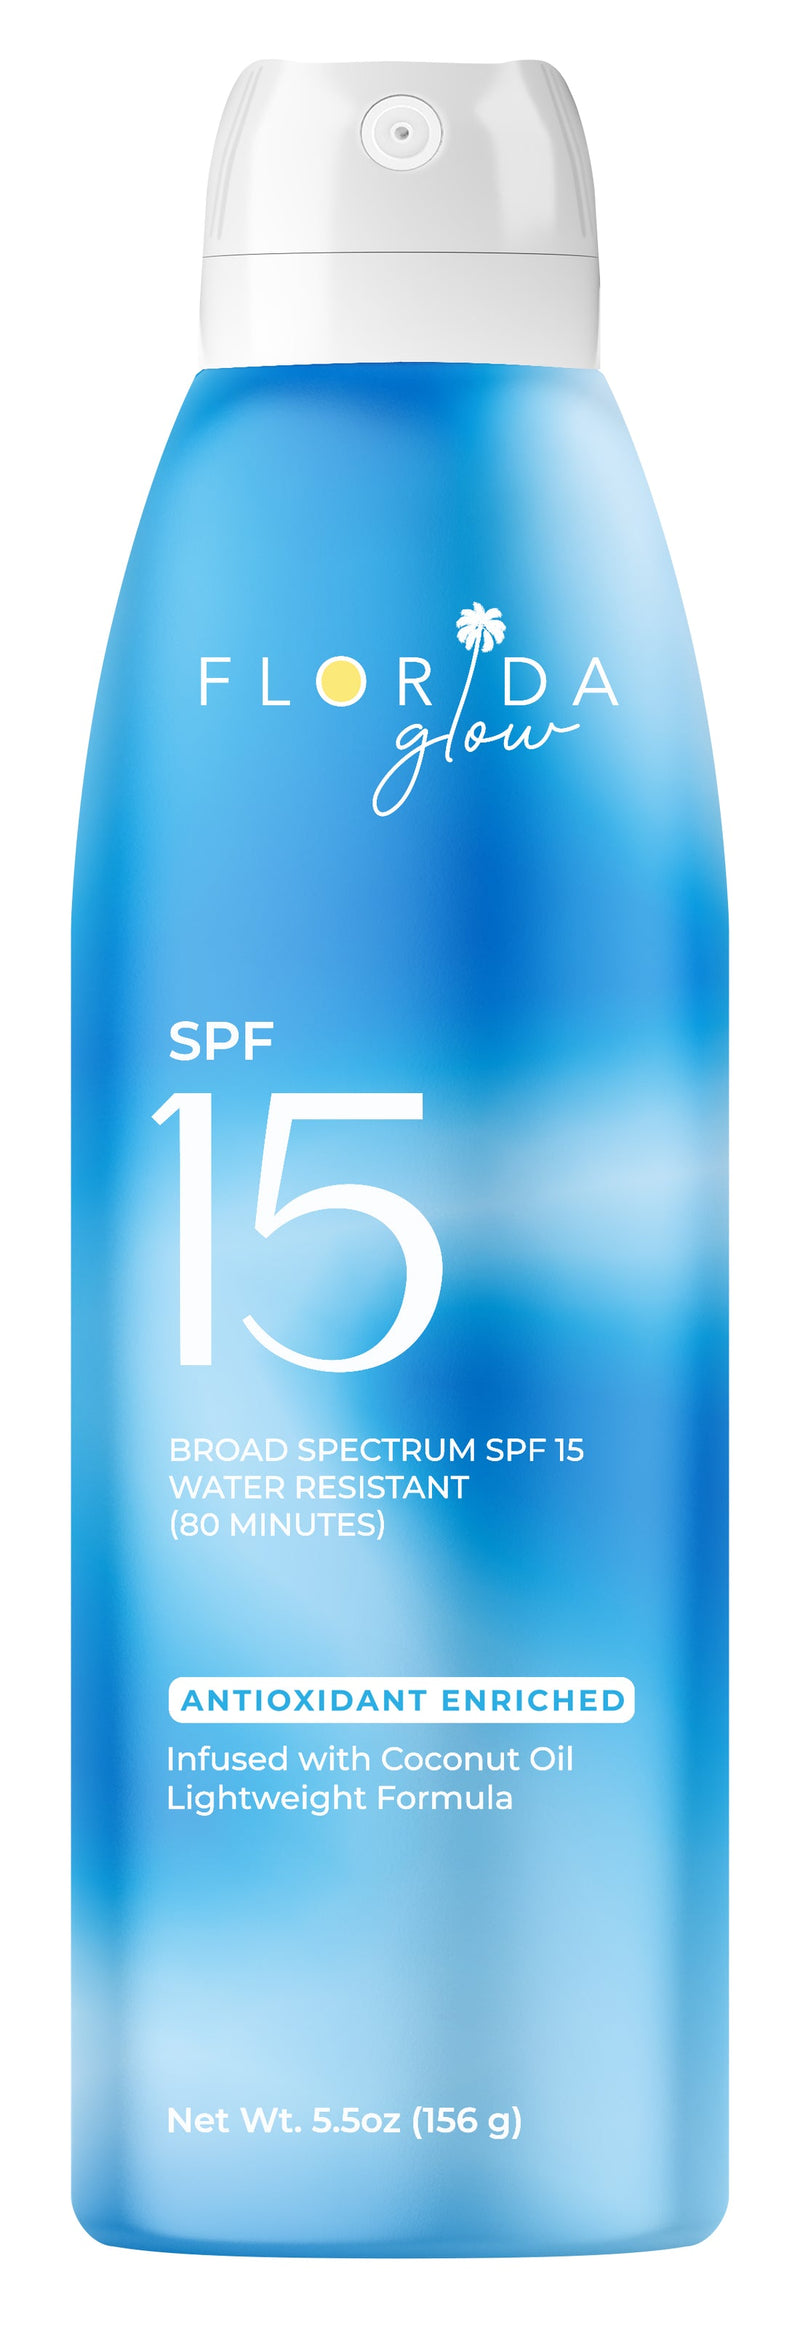 SPF 15 Spray Sunscreen